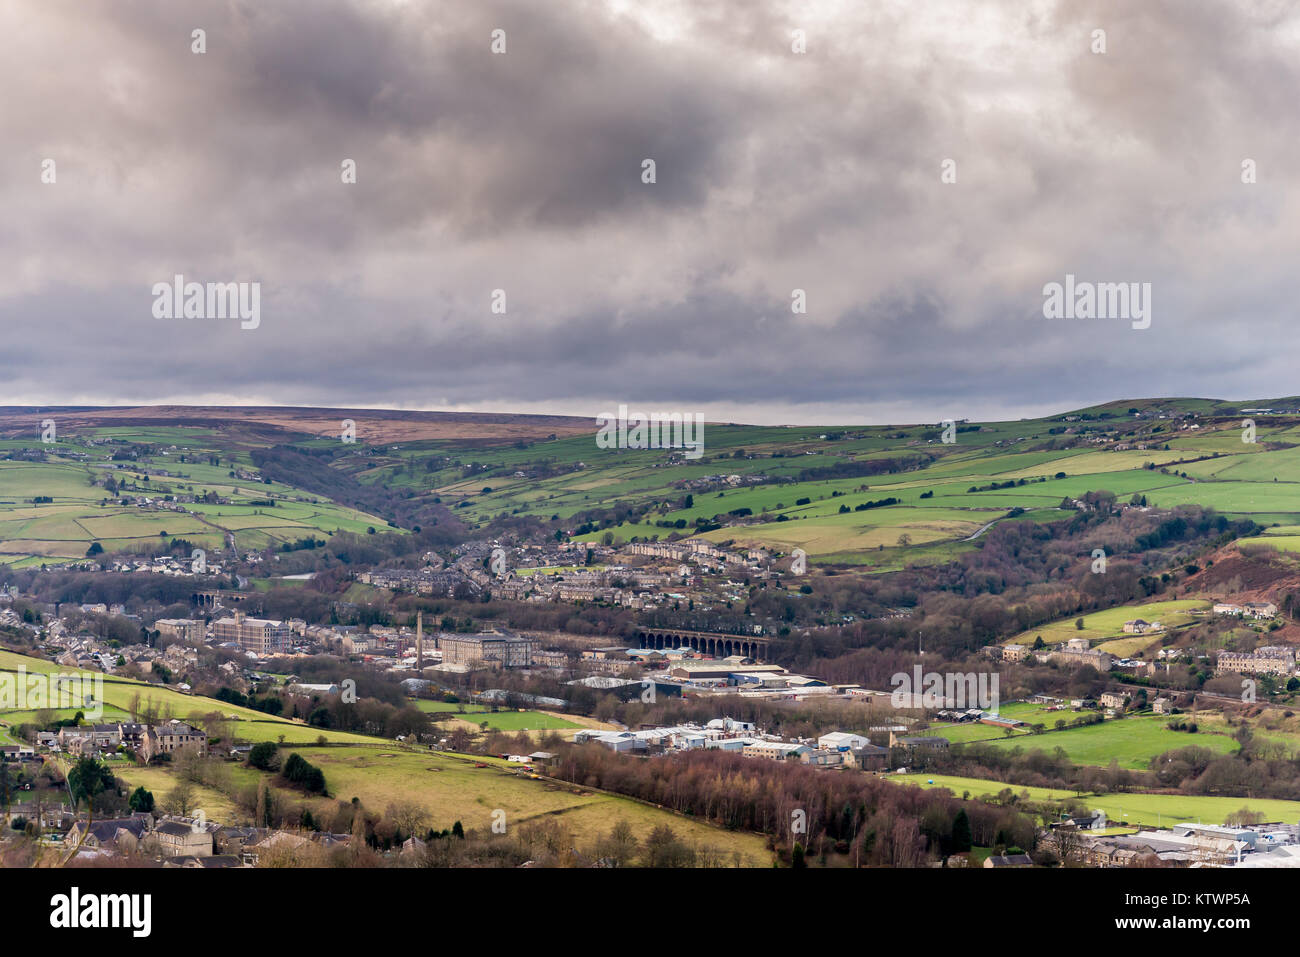 A view of Slaithwaite, Huddersfield, West Yorkshire, England, UK taken from Crosland Heath golf club. Stock Photo